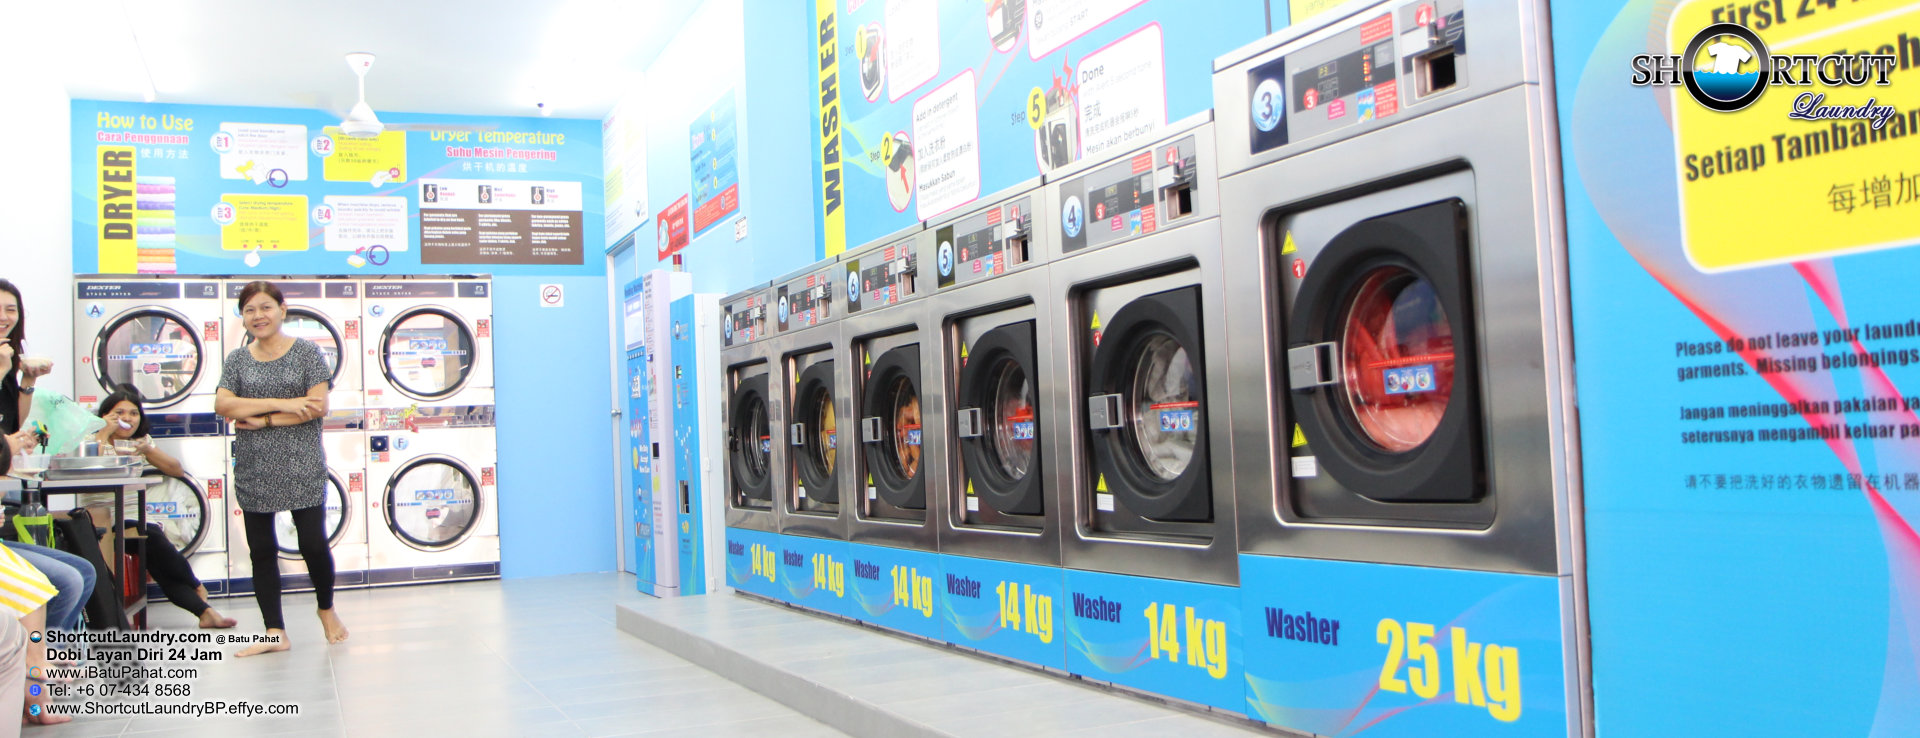 batu-pahat-laundry-shortcut-laundry-24-hours-self-service-laundry-bp-batu-pahat-dobi-layan-diri-24-jam-%e5%b3%87%e6%a0%aa%e5%b7%b4%e8%be%96%e8%87%aa%e5%8a%a9%e6%b4%97%e8%a1%a3%e5%ba%97-washers-and-dry